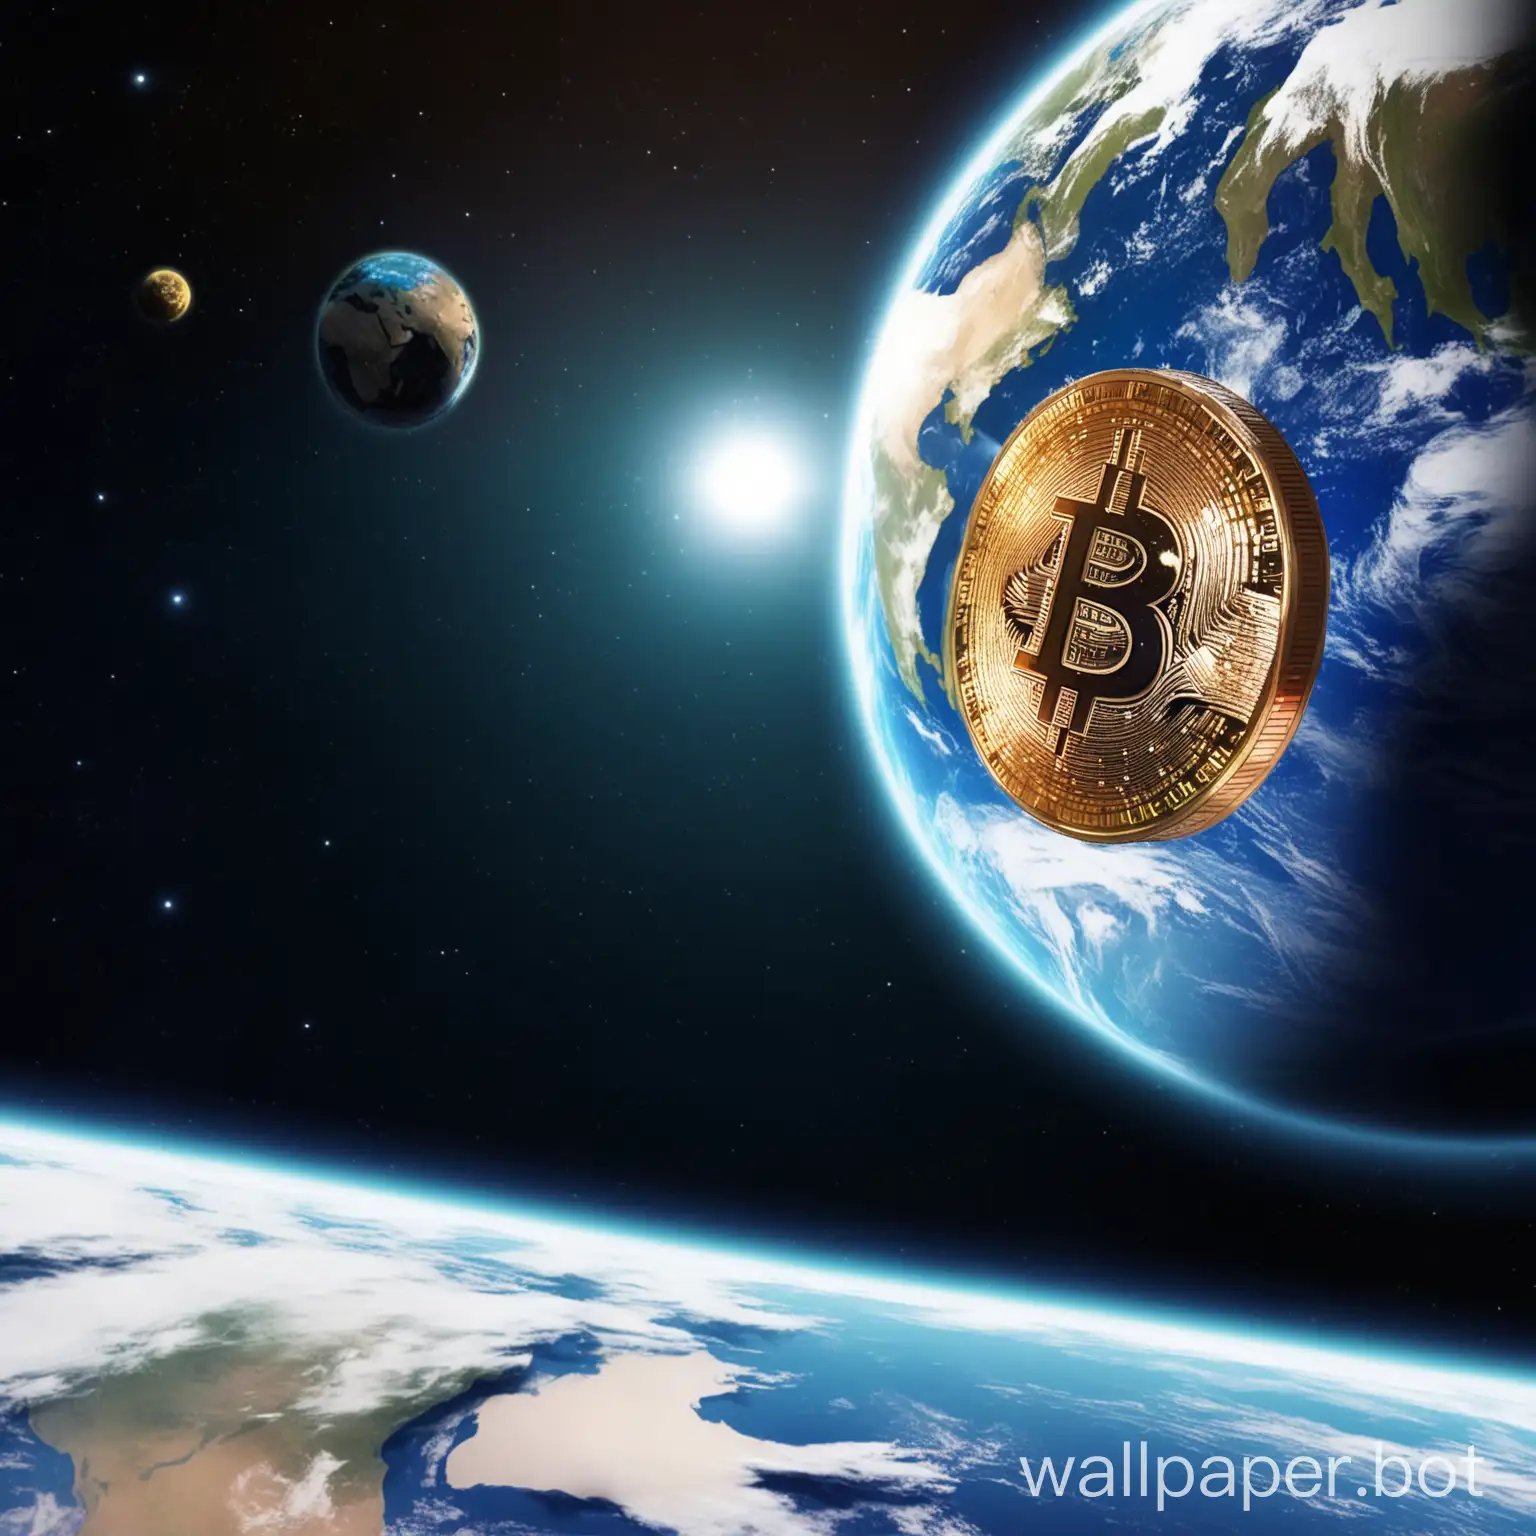 Bitcoin-Emerging-Behind-Earth-in-Cosmic-Display